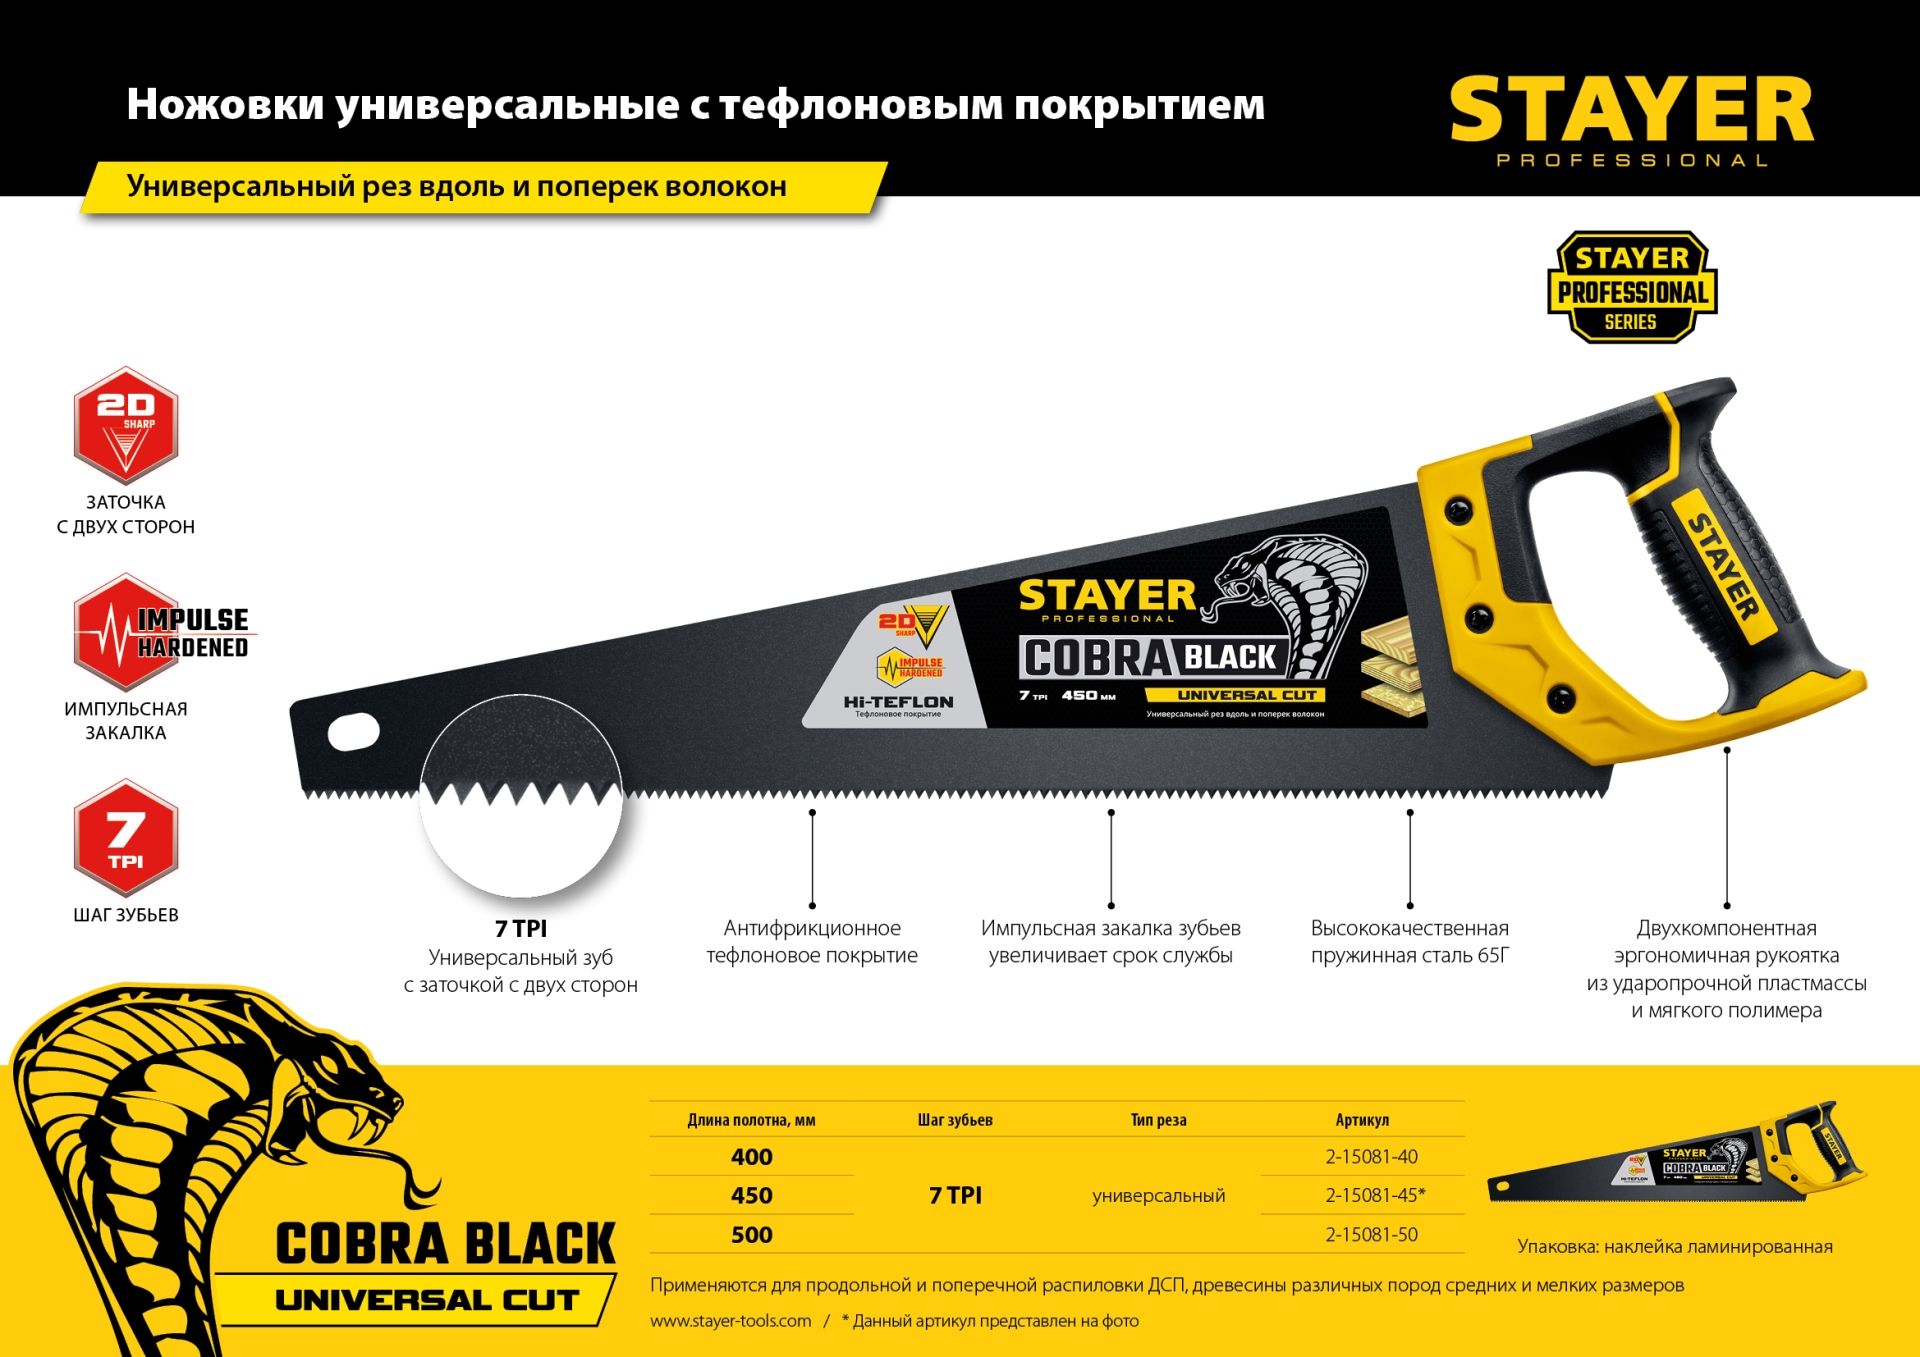 STAYER Cobra Black, 500 мм, универсальная ножовка, Professional (2-15081-50)